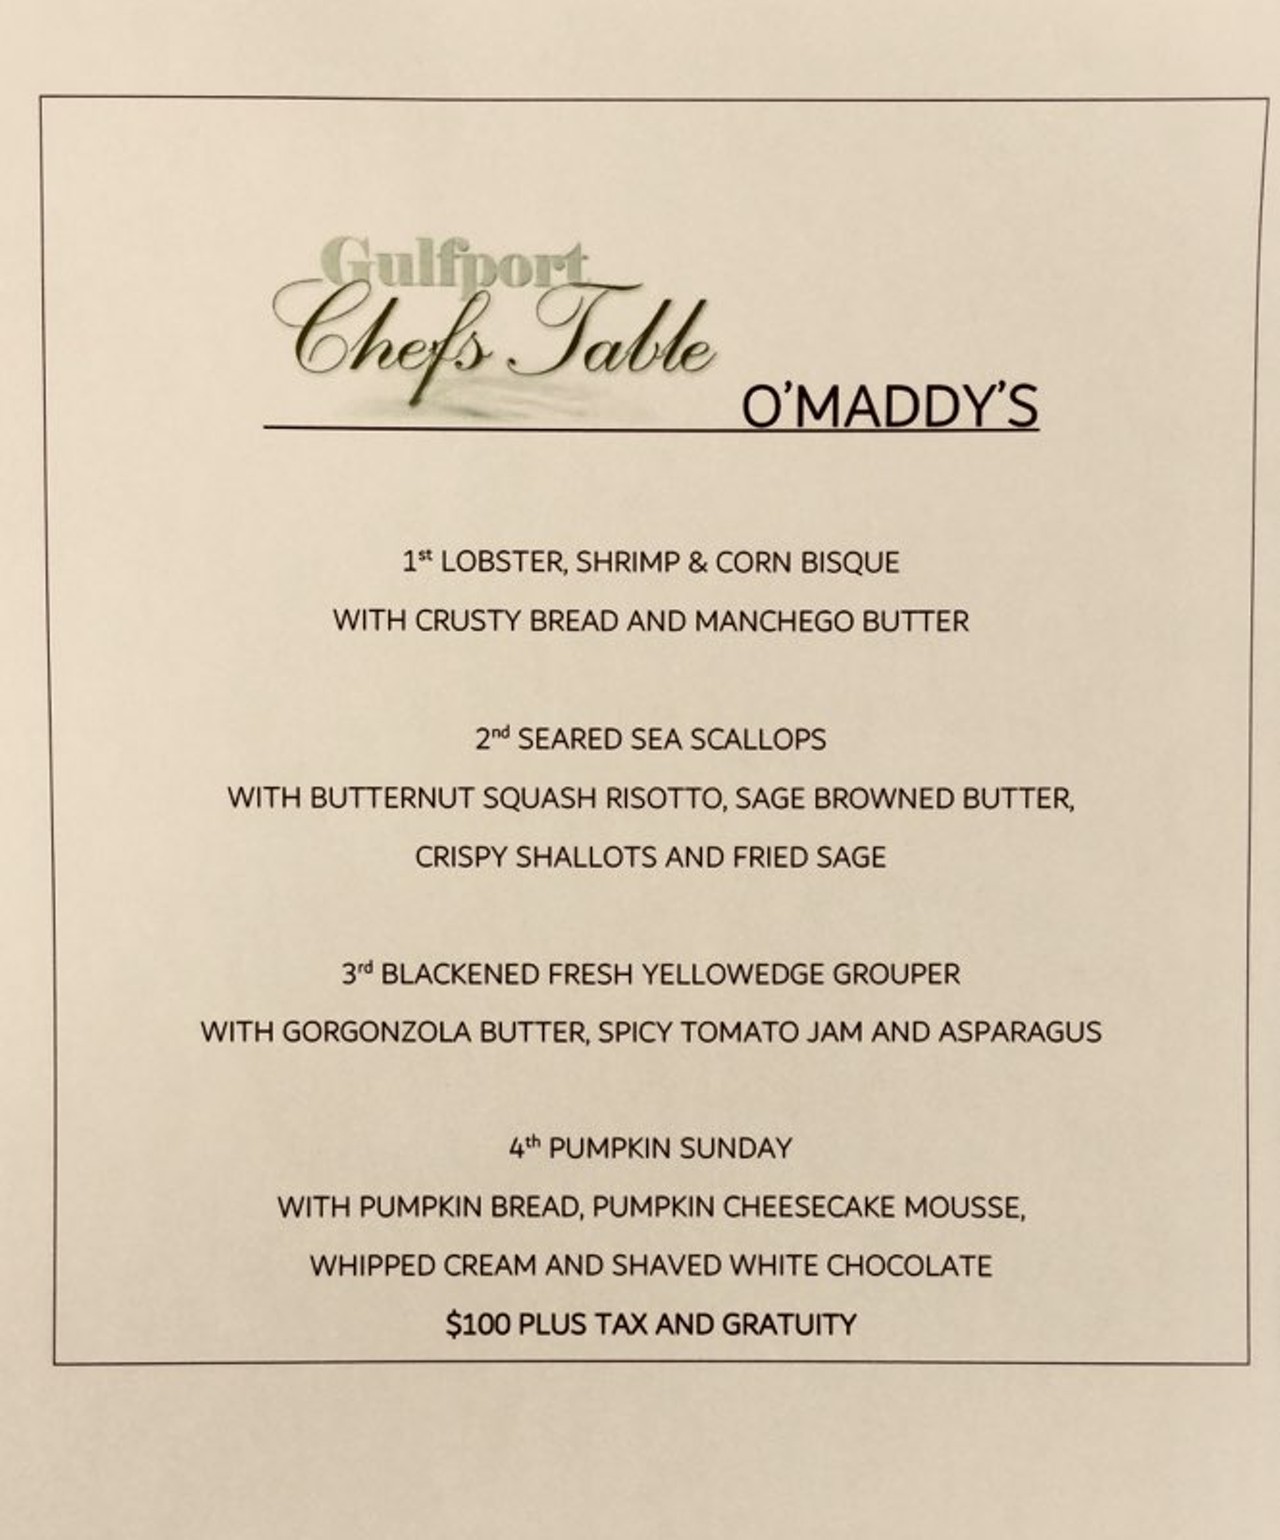 Gulfport Chef's Table 2018 O'Maddy's menu